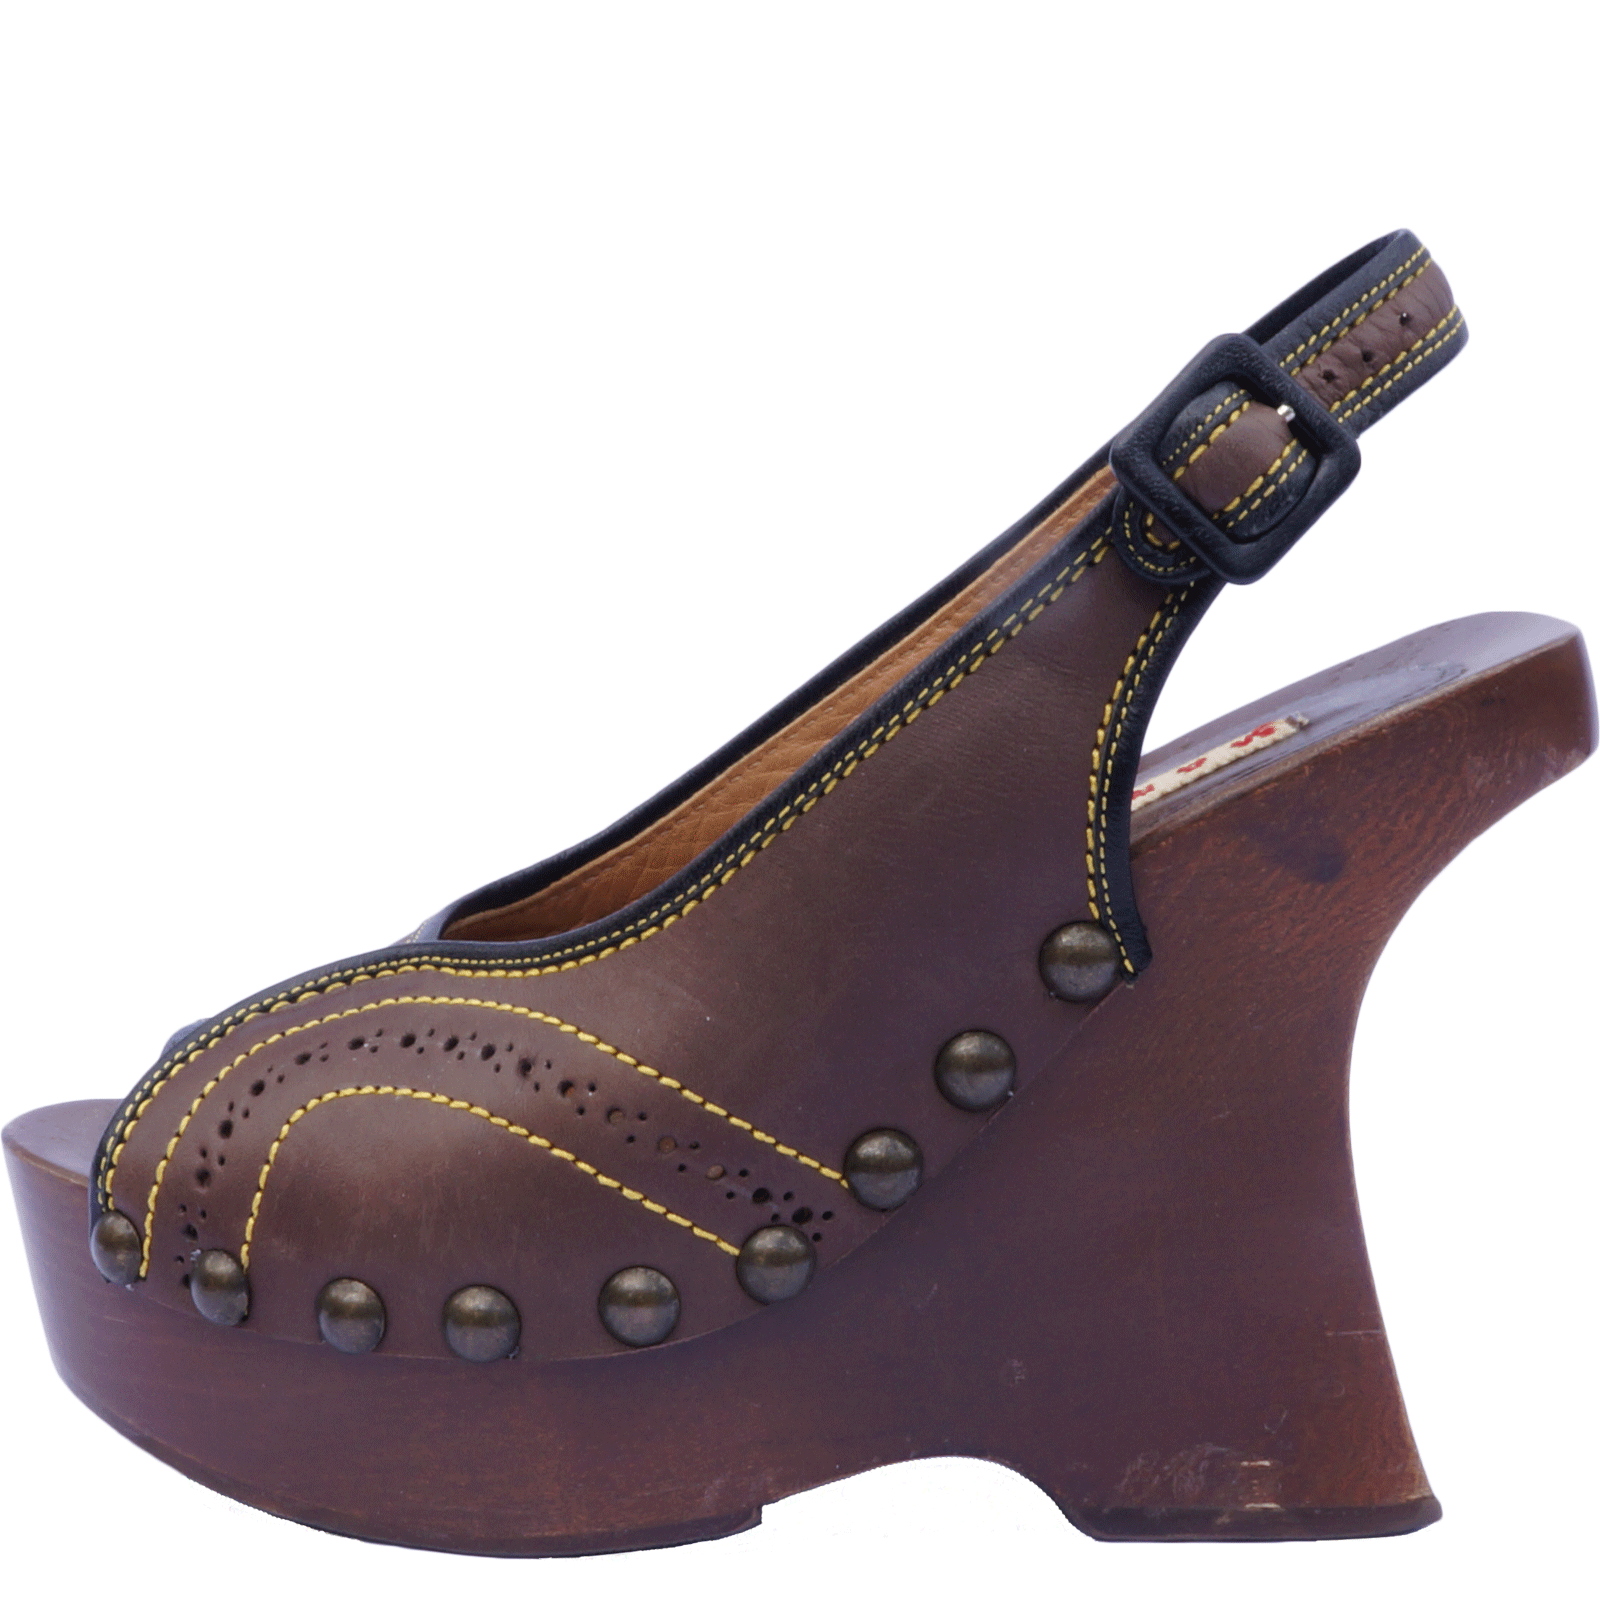 Marni brown leather wedge sandal, wood wedge heel, studded at leather. Vintage 1990's